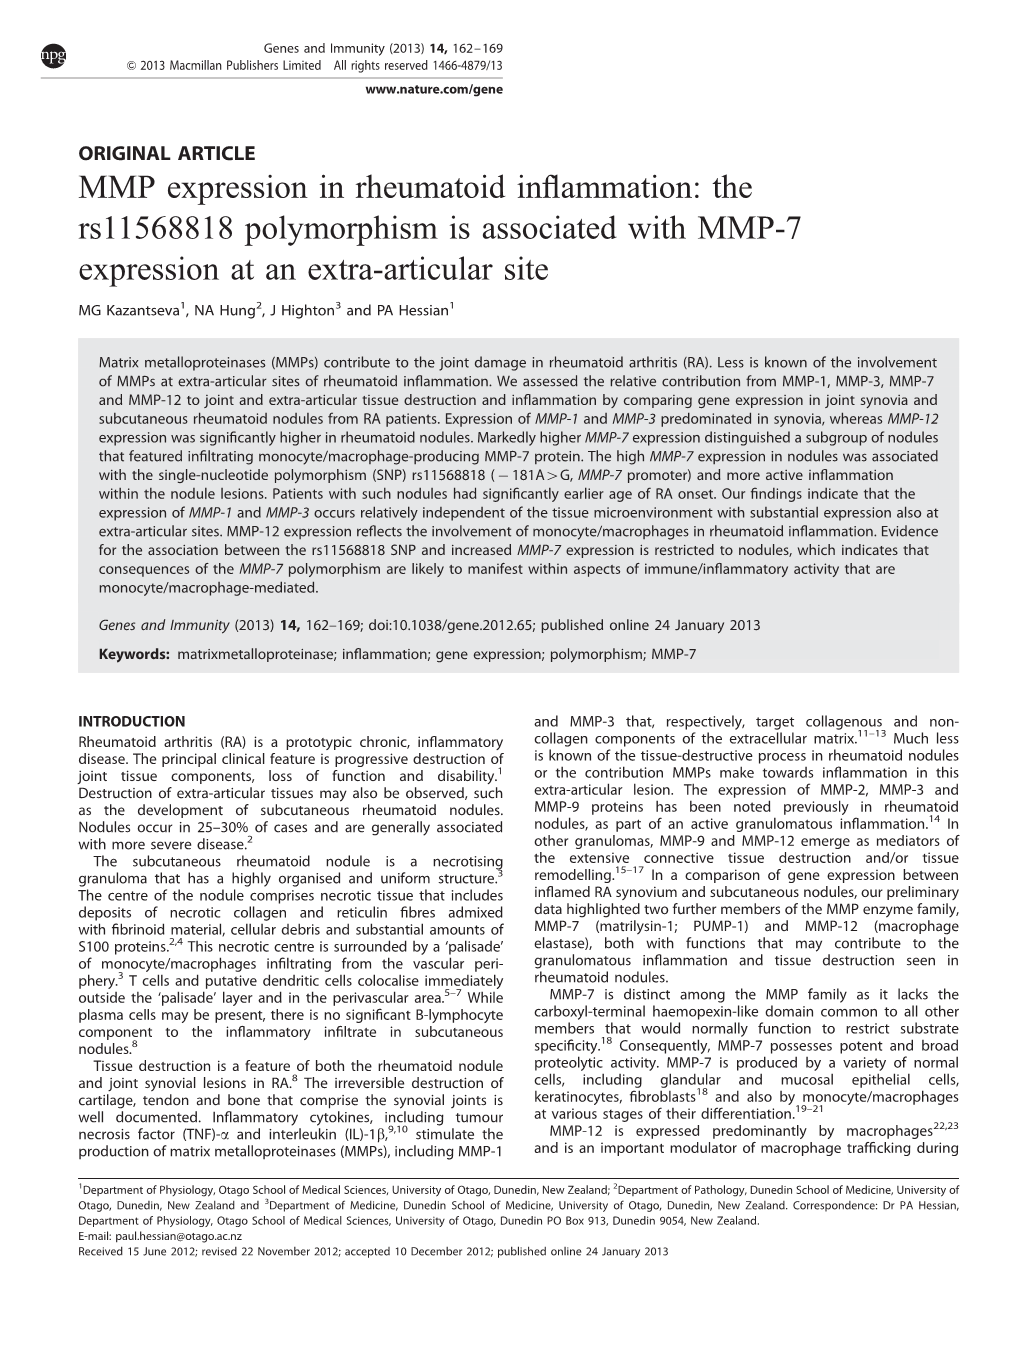 MMP Expression in Rheumatoid Inflammation